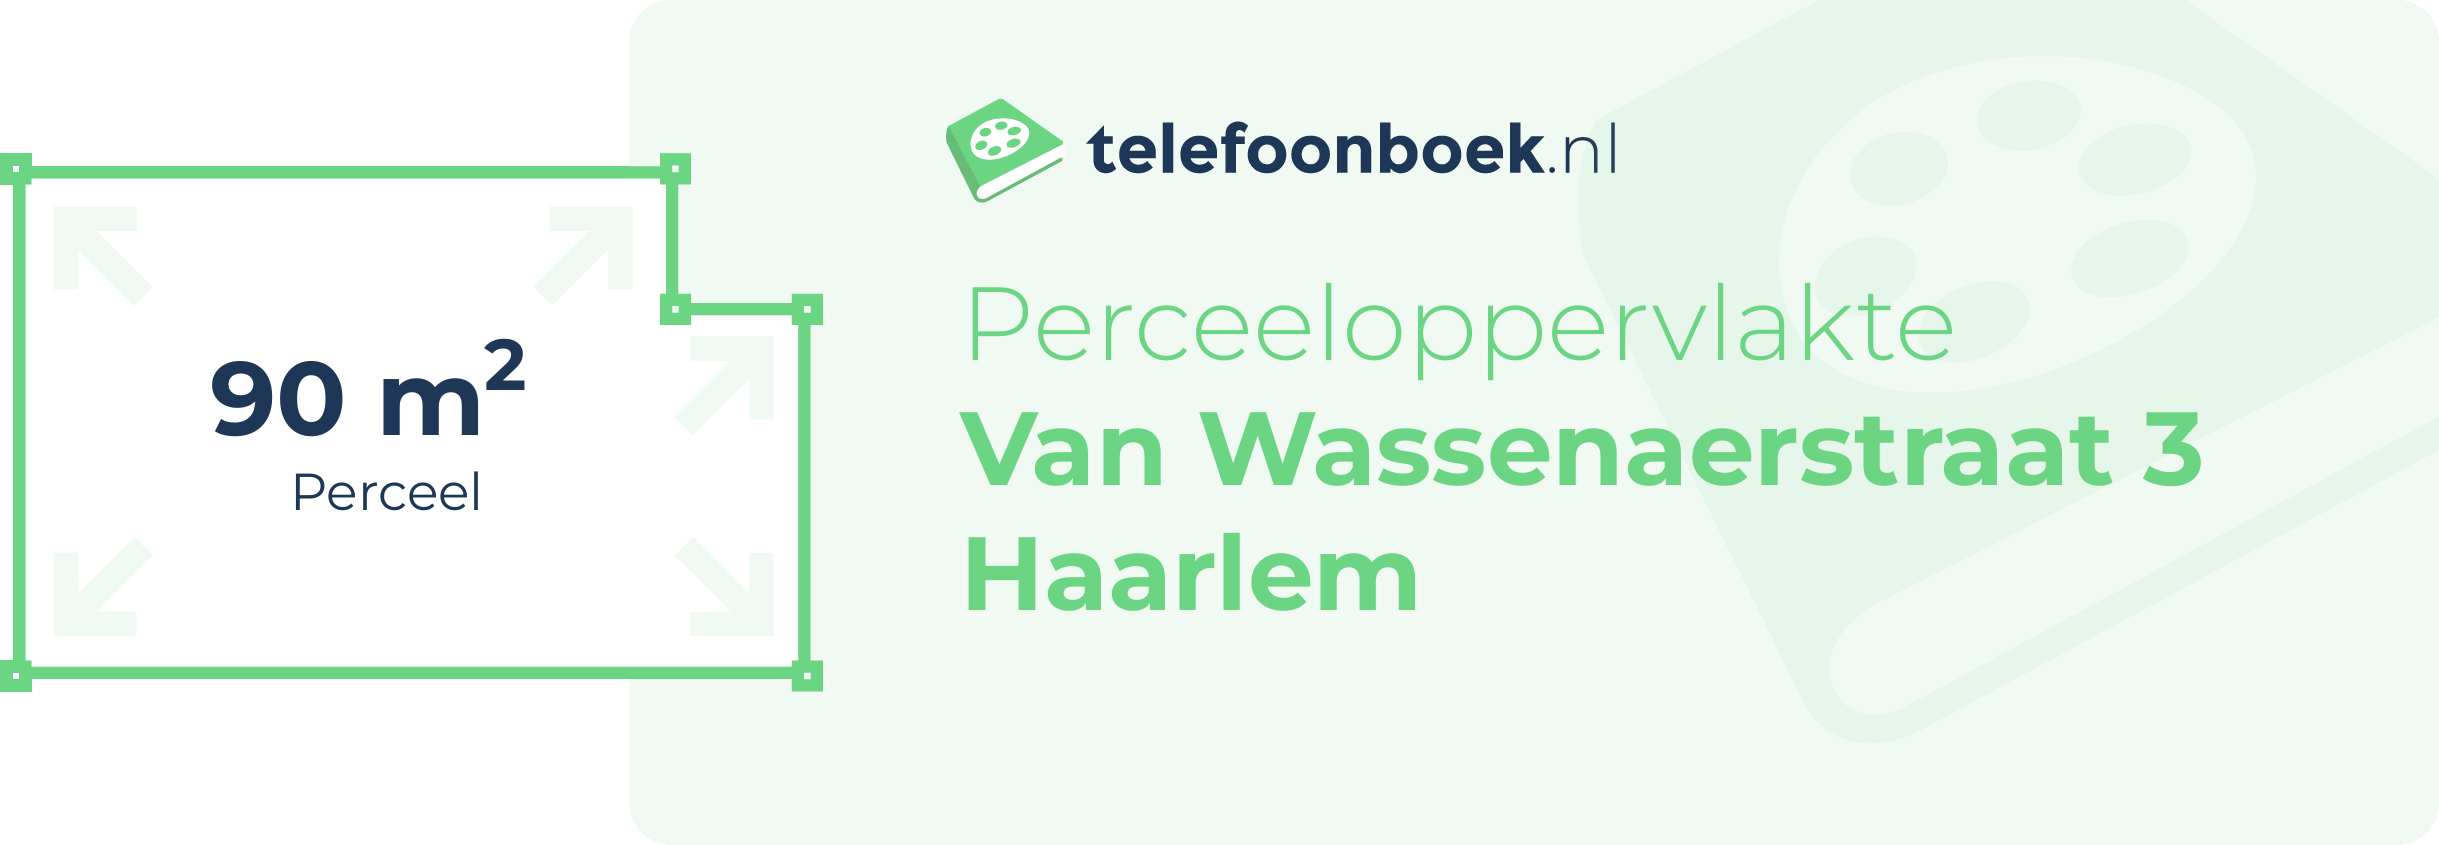 Perceeloppervlakte Van Wassenaerstraat 3 Haarlem